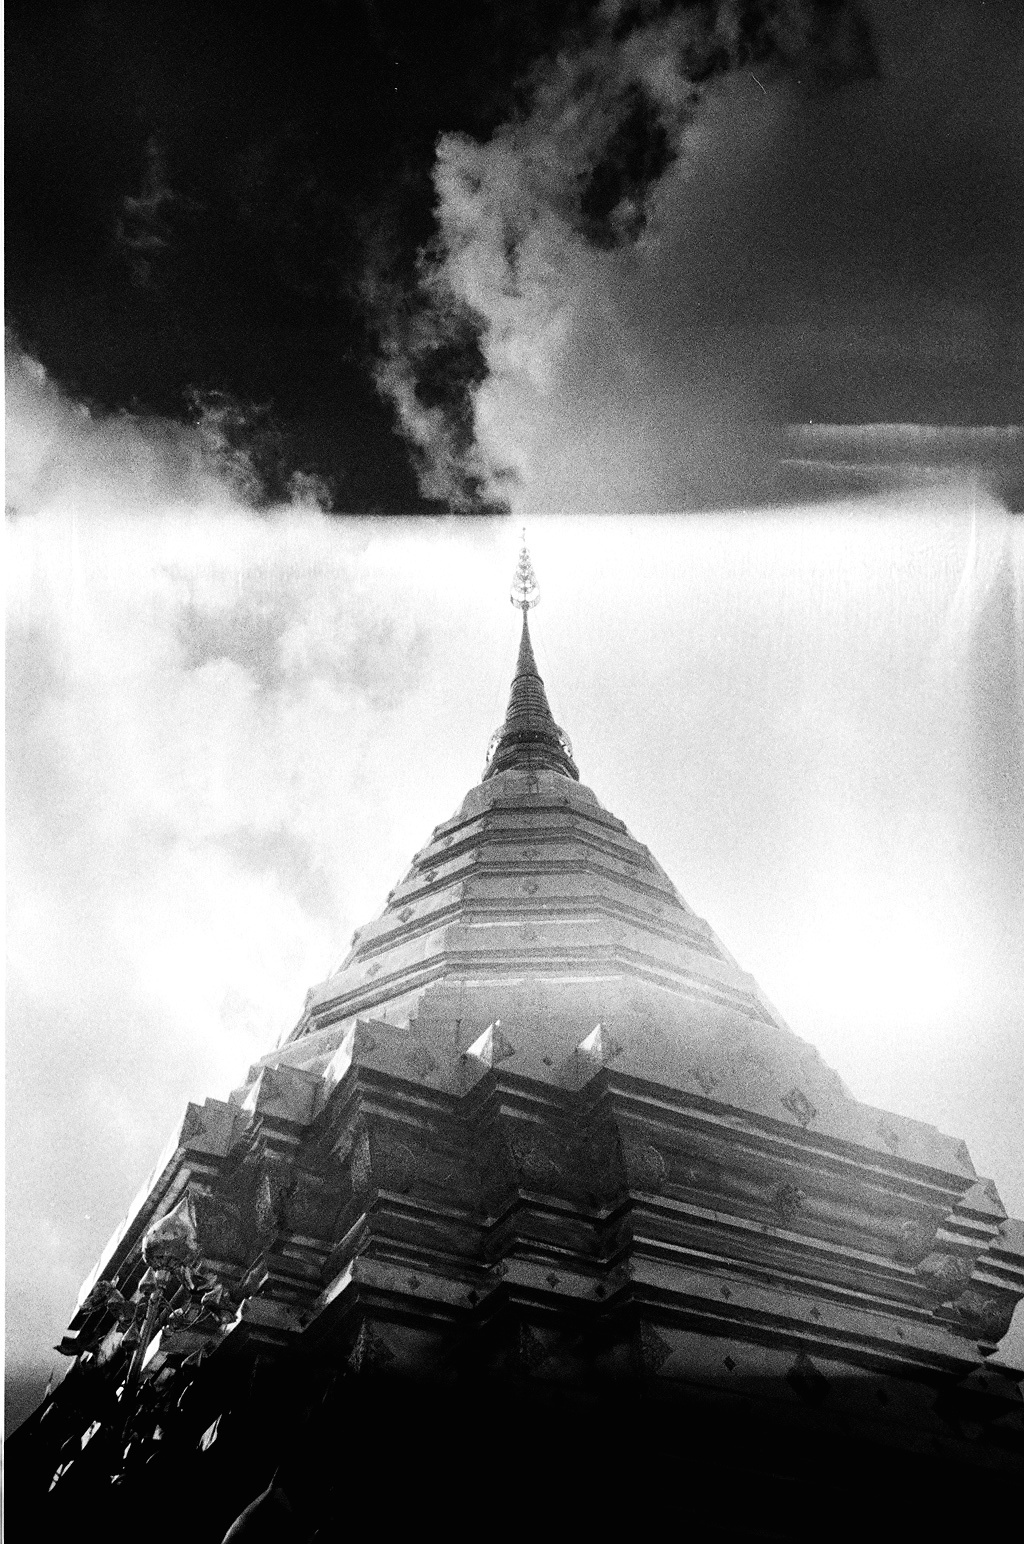 filmisnotdead 35mm istillshootfilm analgue analoguephotography grain asia Travel indonesia Thailand Laos vietnam